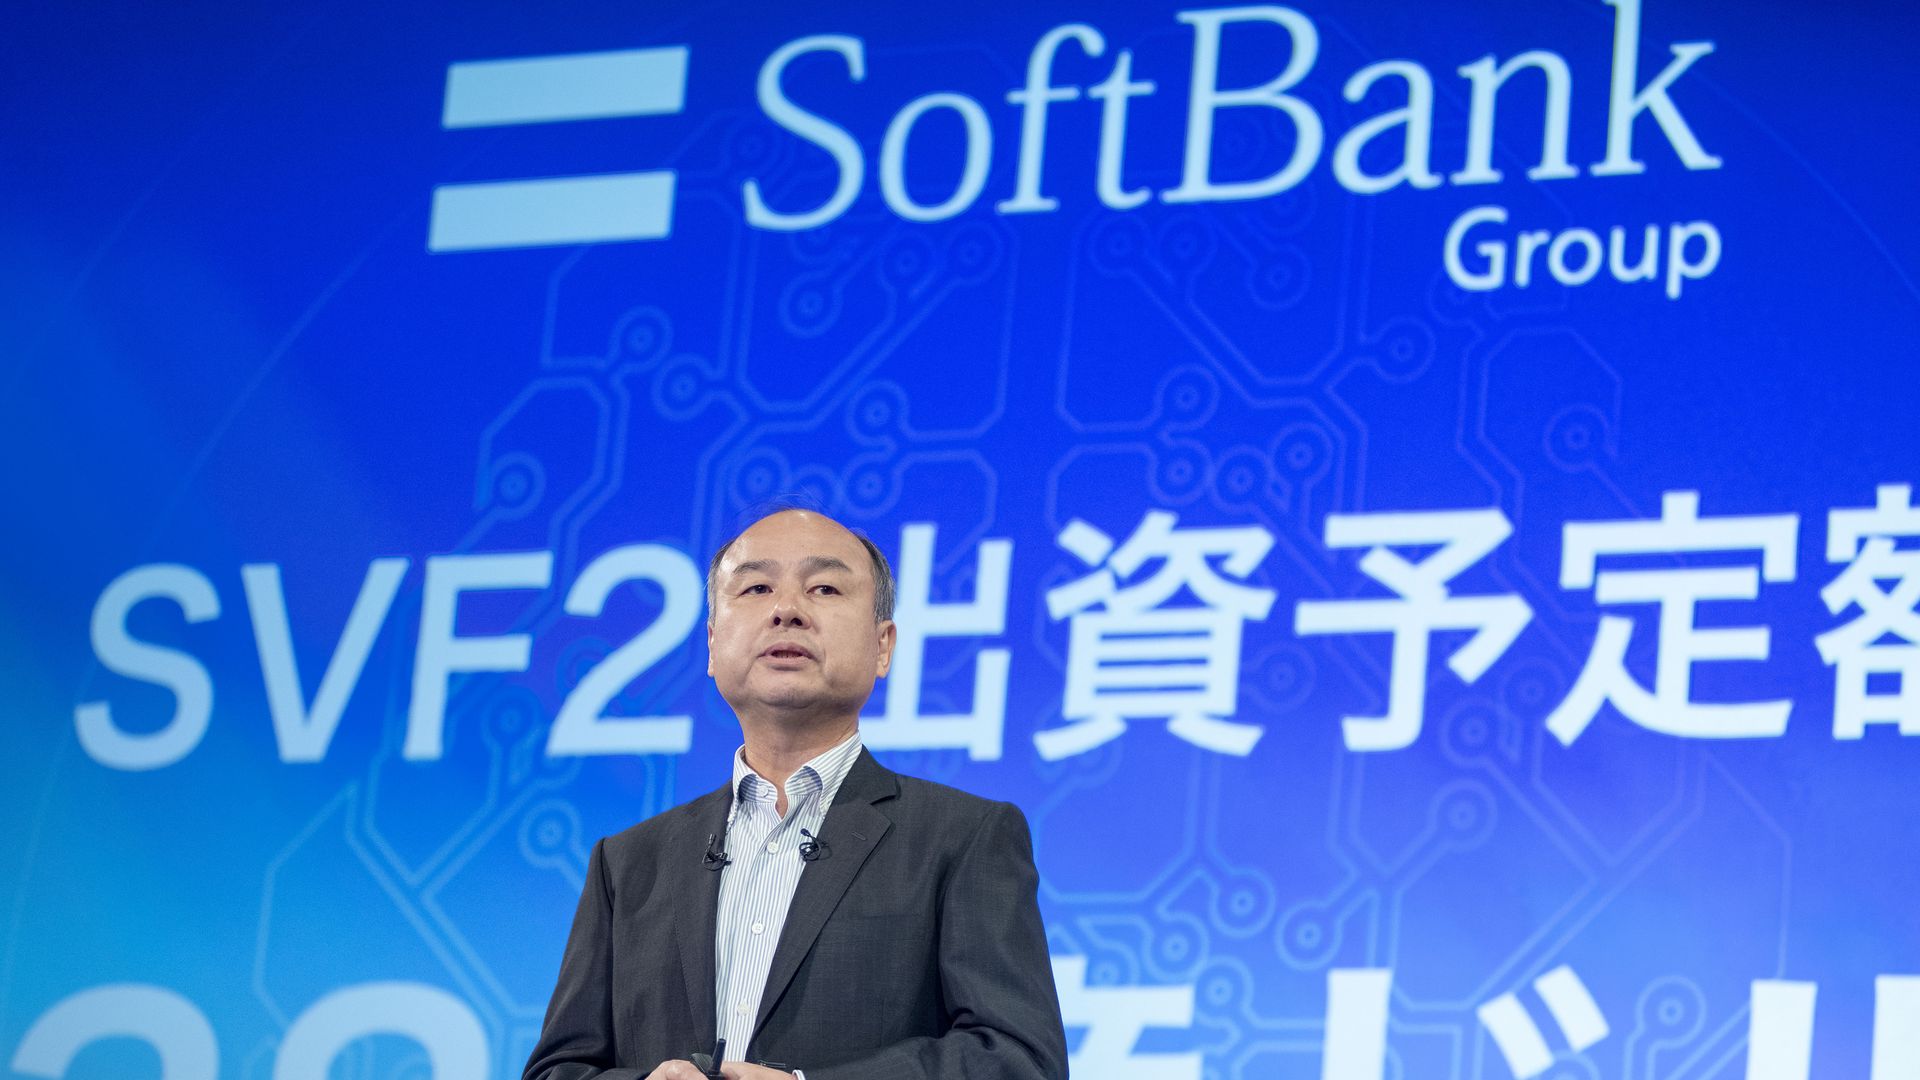 SoftBank Group CEO Son Masayoshi presents earnings figures